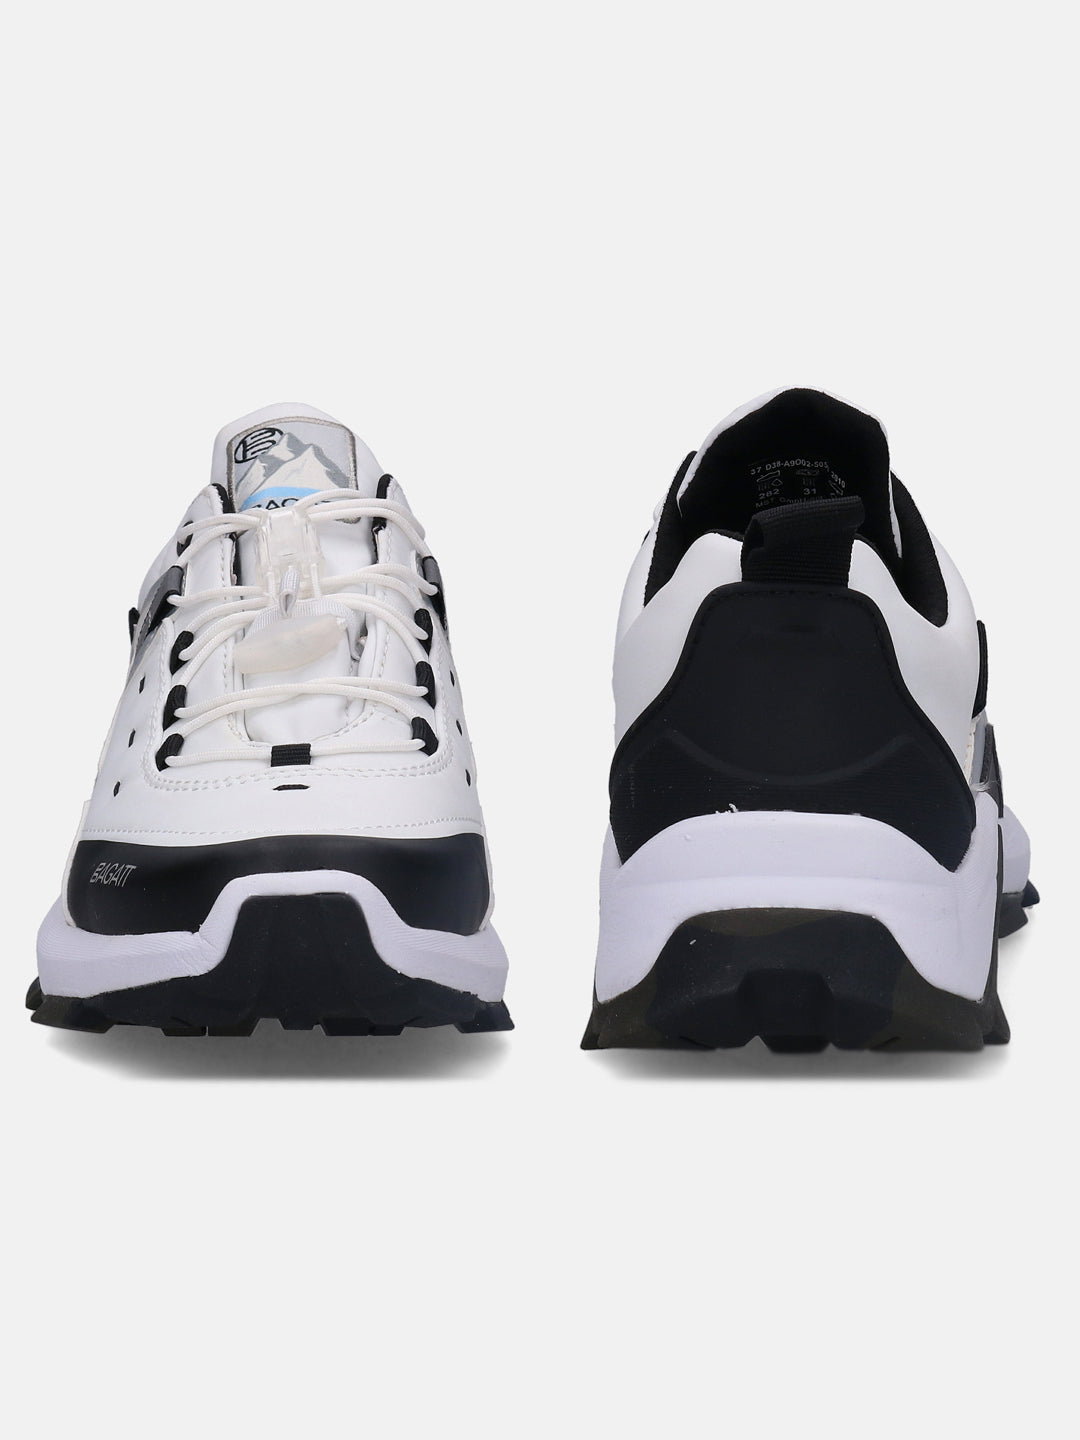 Nakota White & Black Sneakers - BAGATT